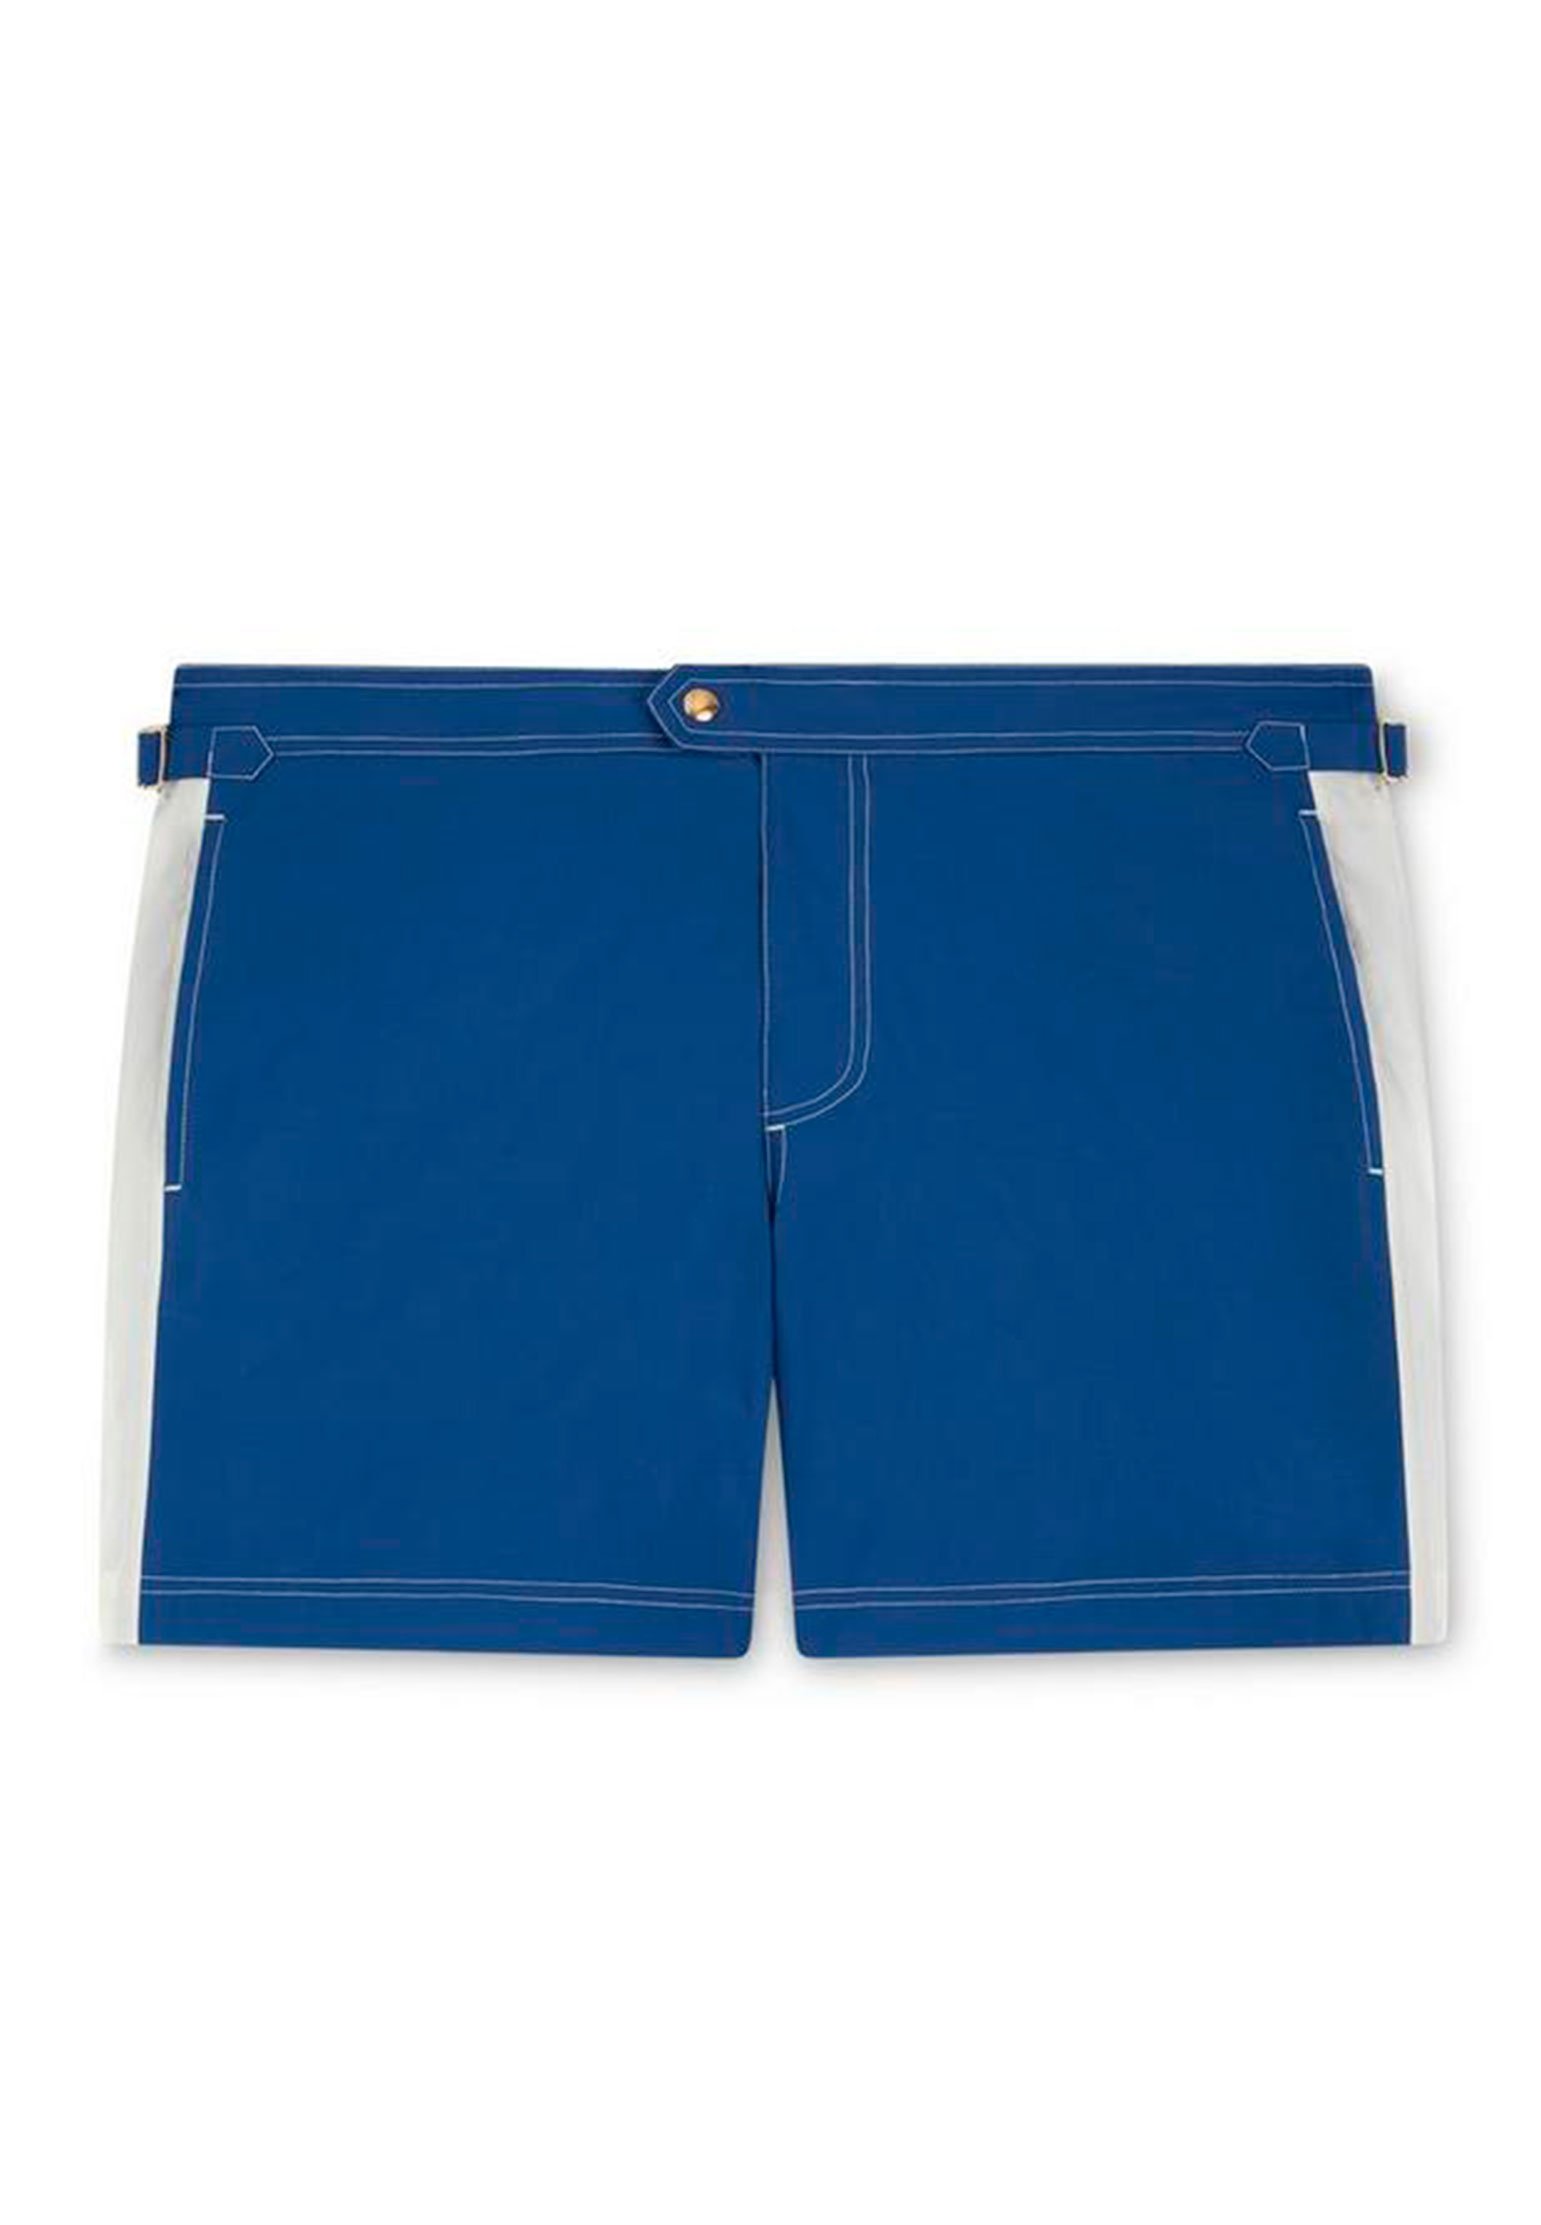 Beachwear TOM FORD Color: blue (Code: 1160) in online store Allure